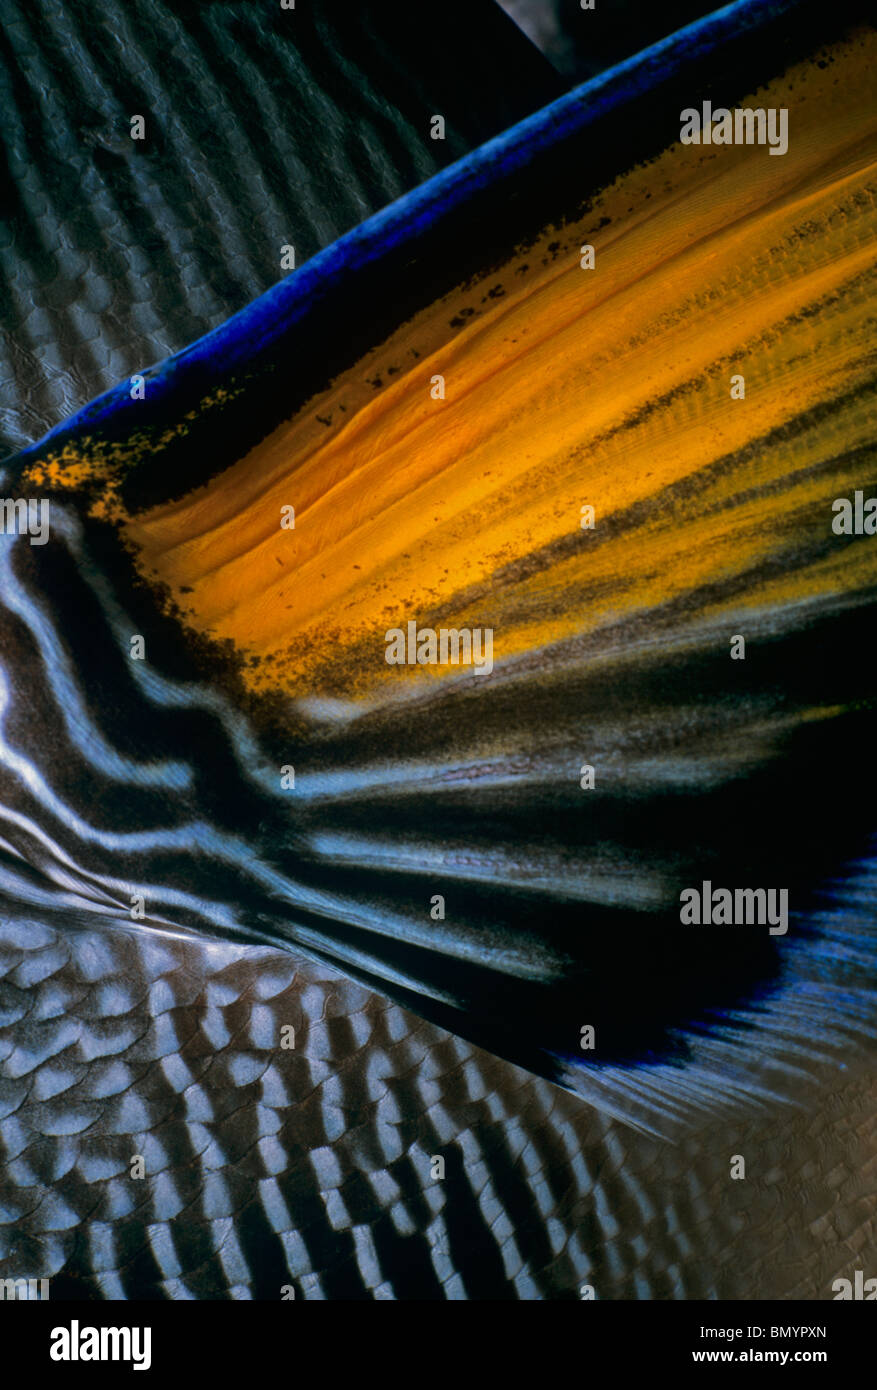 Sohal Surgeonfish (Acanthurus sohal) - Pectoral Fin. Egypt - Red Sea Stock Photo